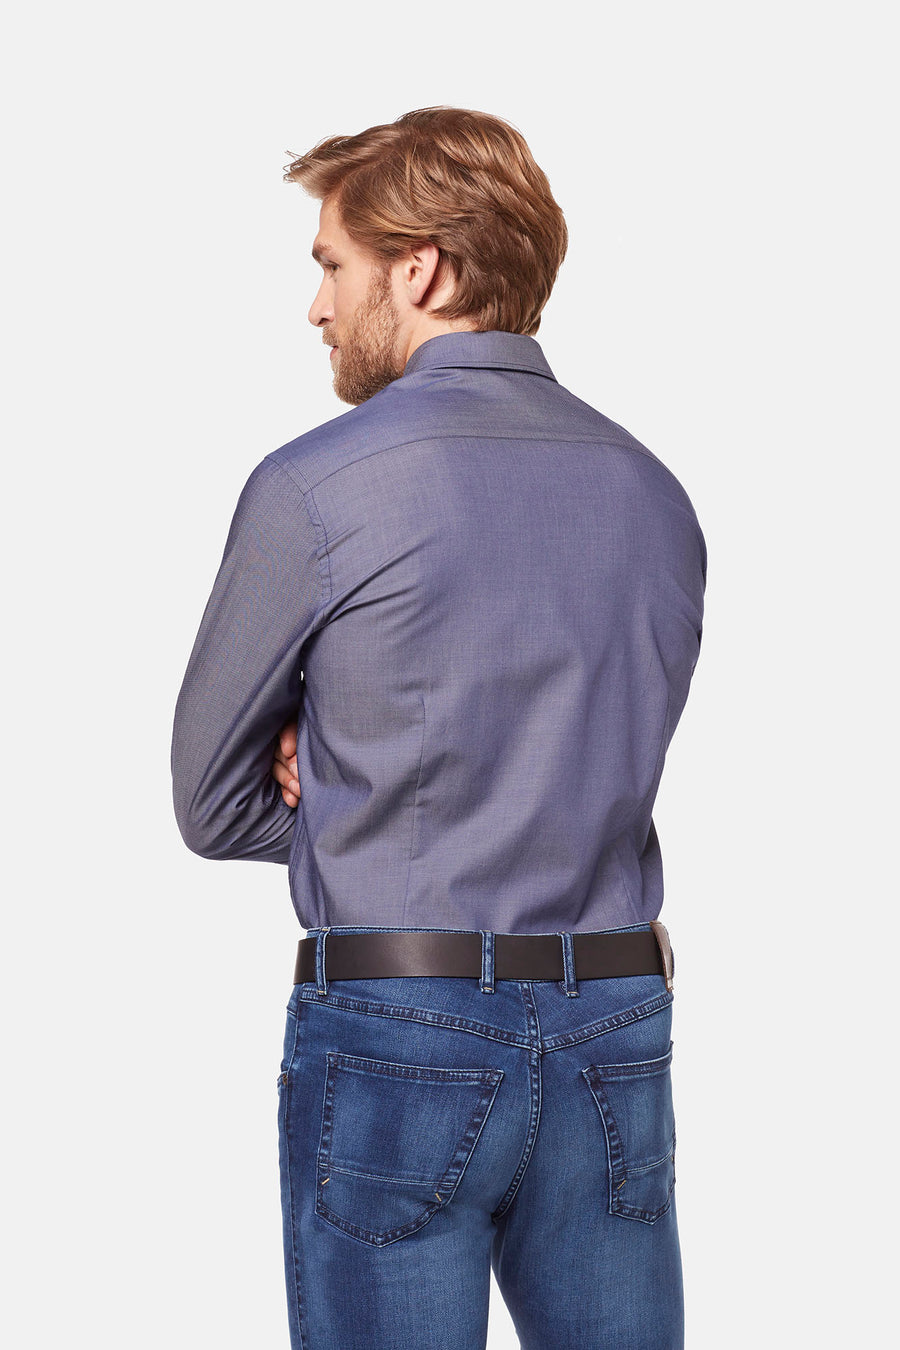 Long Sleeve Textured Plain - Hobo Menswear